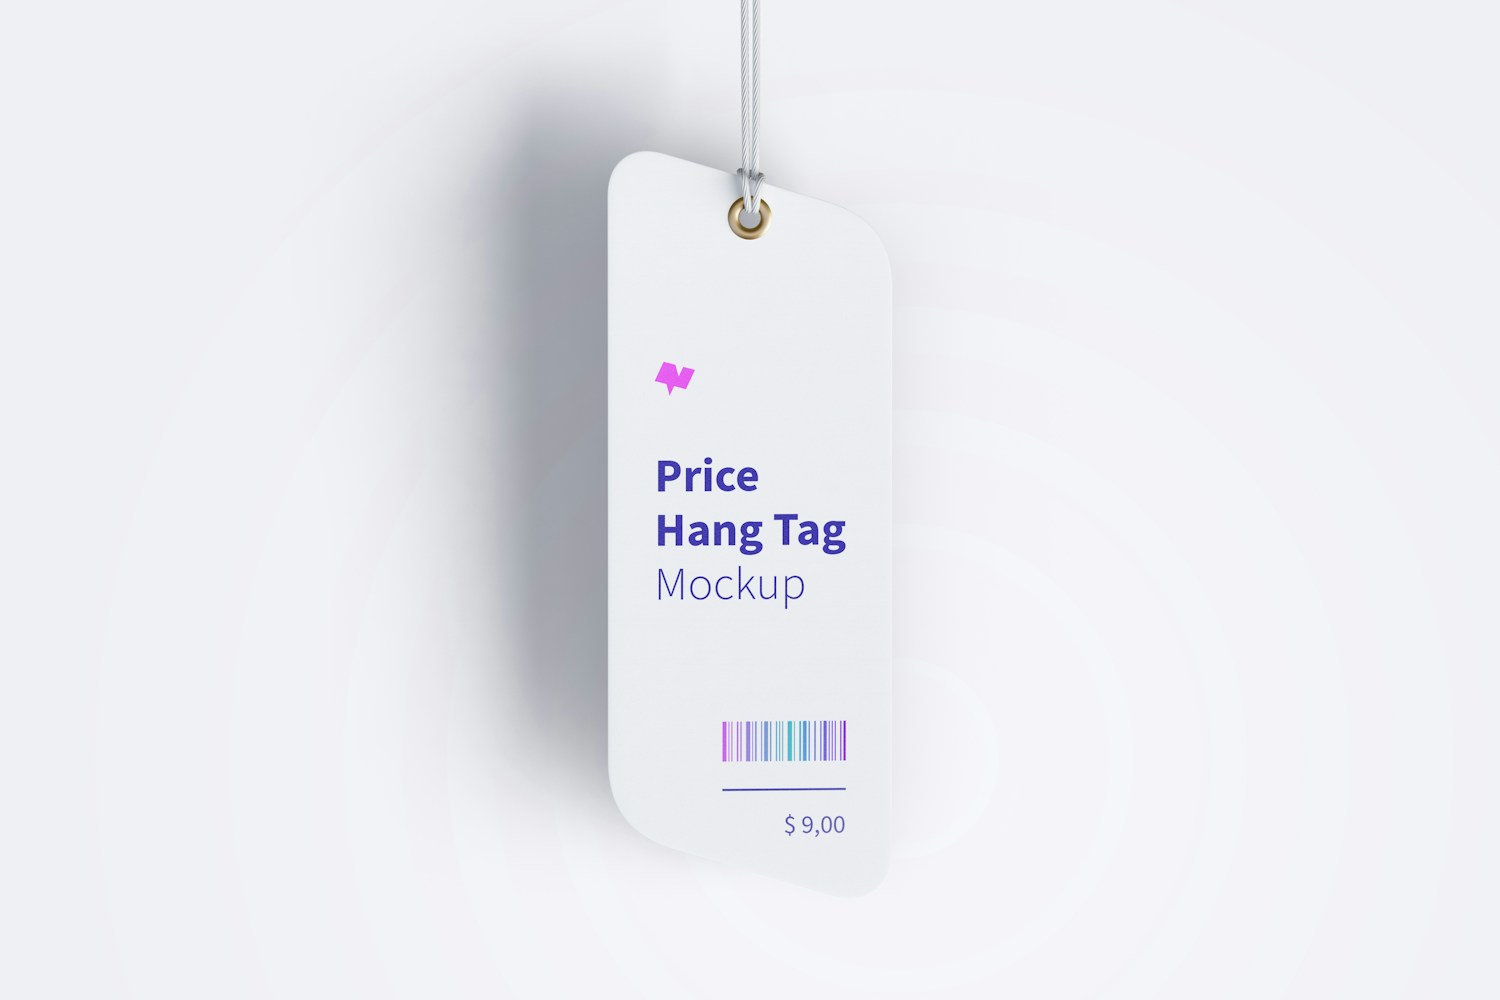 Price Hang Tag Mockup with String